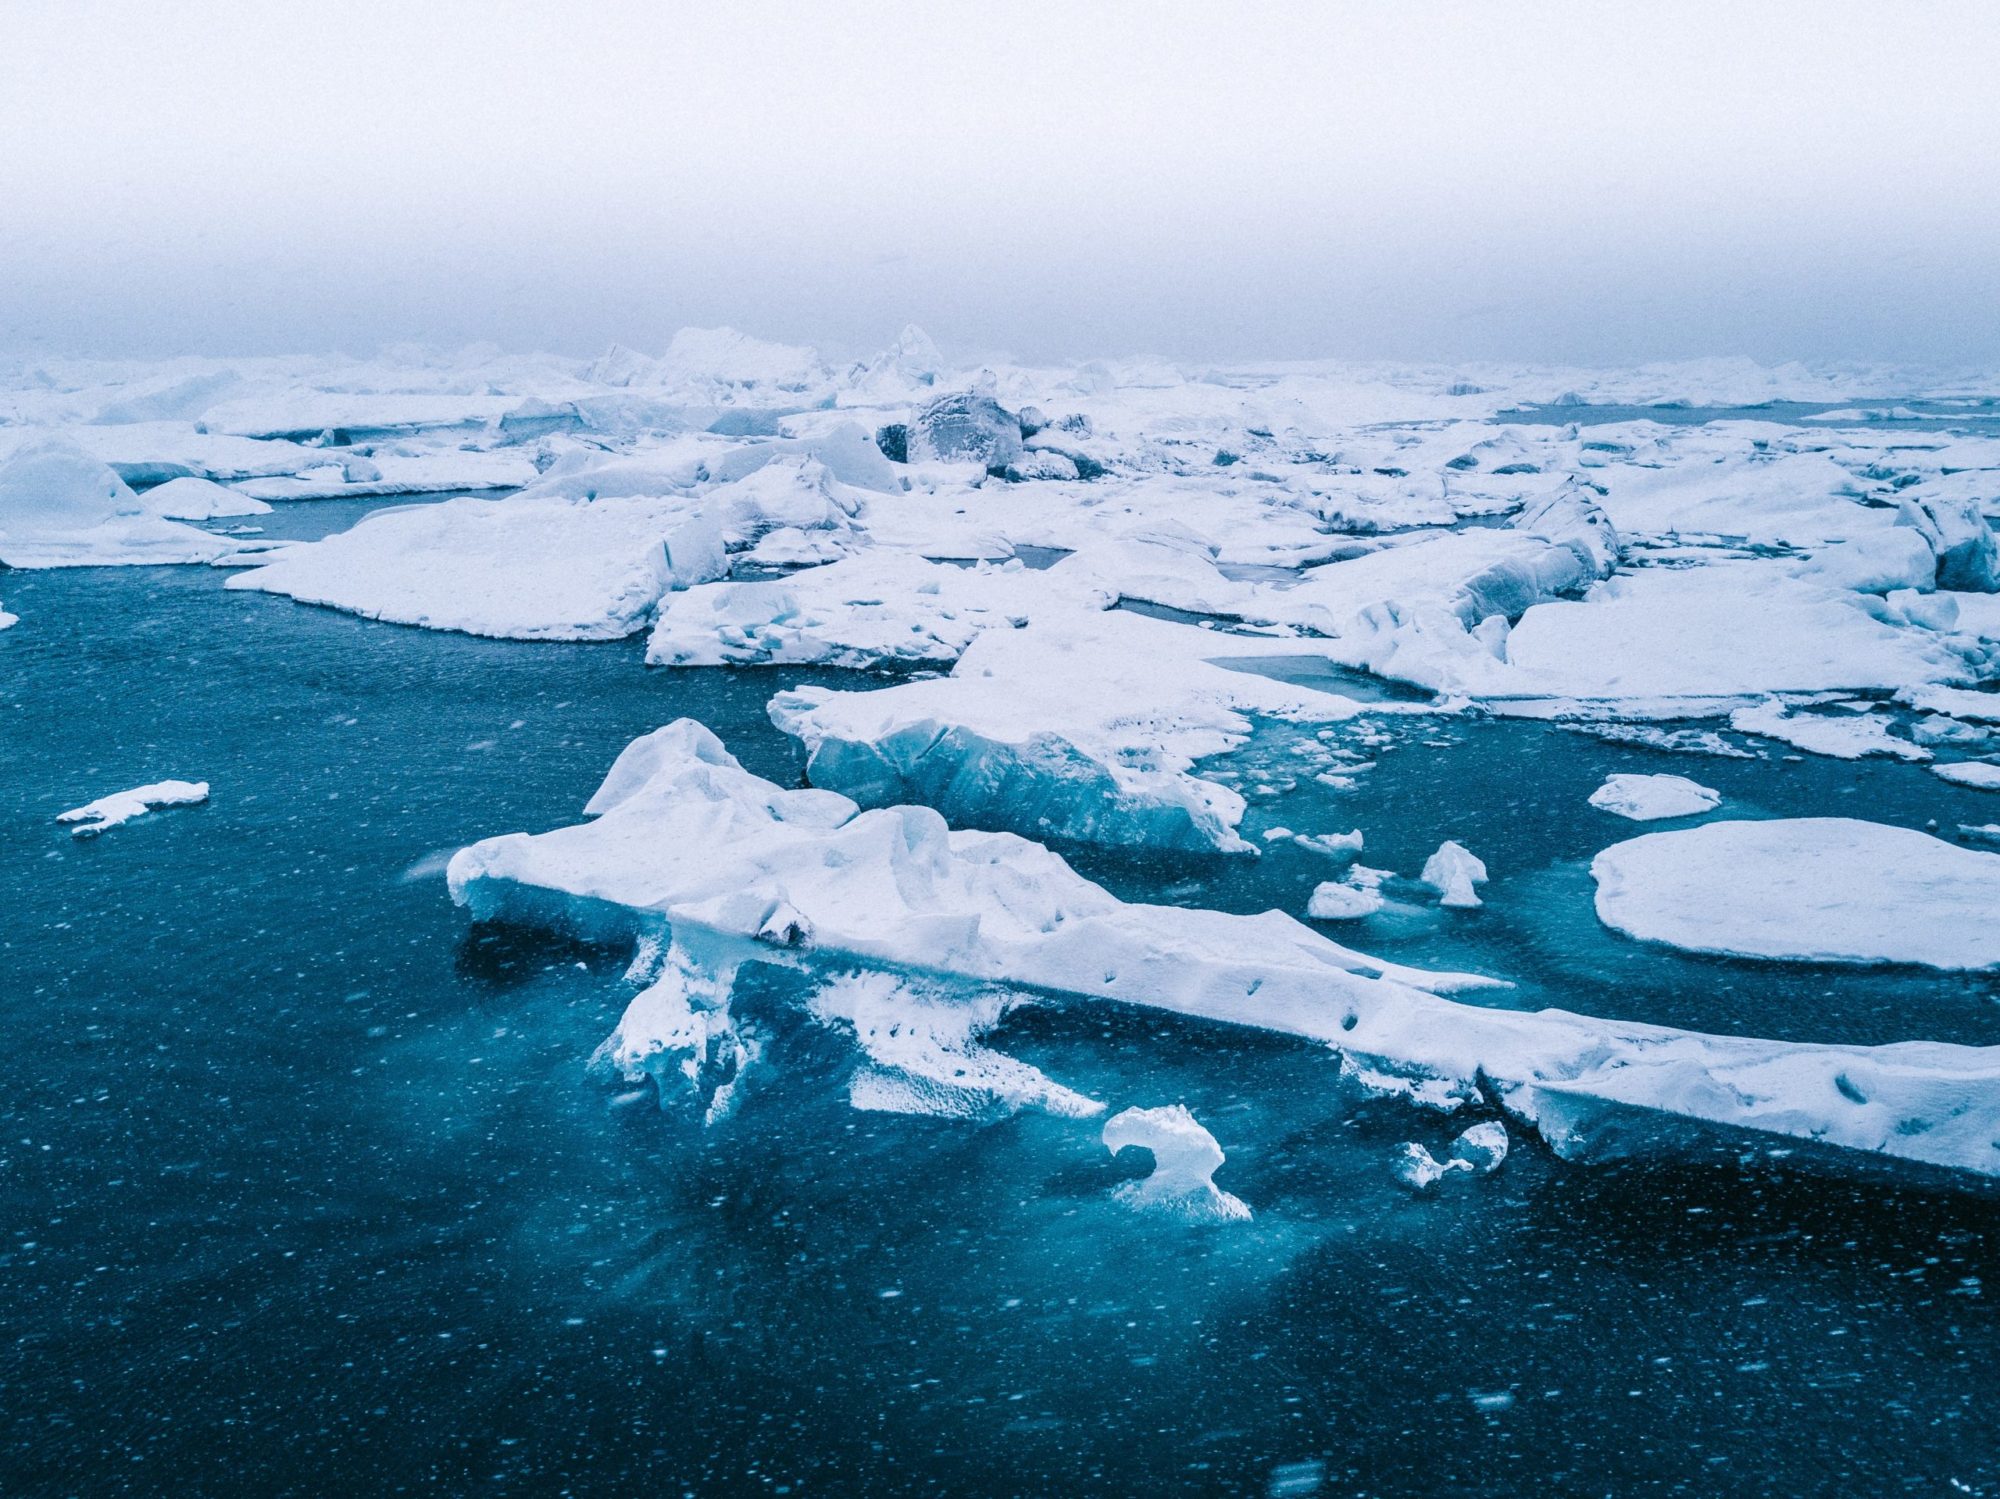 Understanding China’s Economic Presence in the Arctic